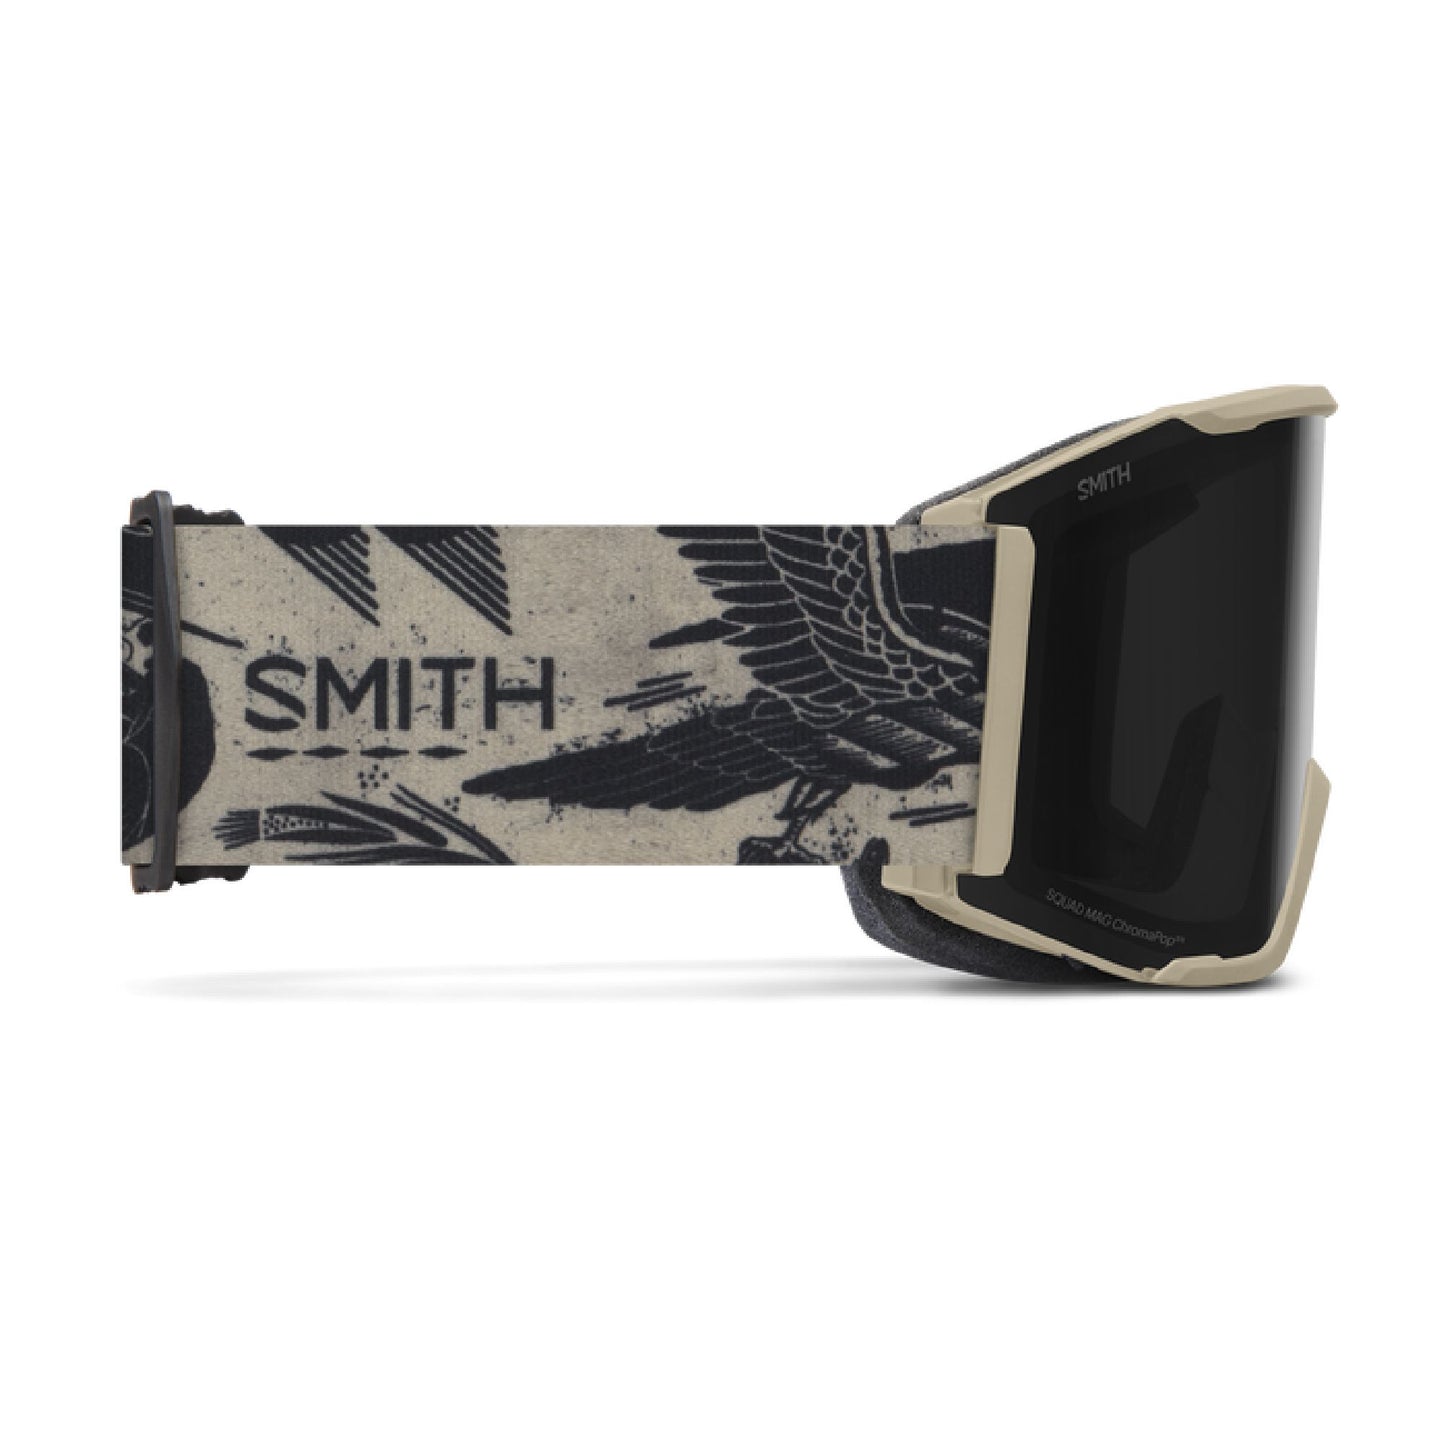 Smith Squad MAG Low Bridge Fit Snow Goggle Artist Series | Jess Mudget ChromaPop Sun Black Snow Goggles